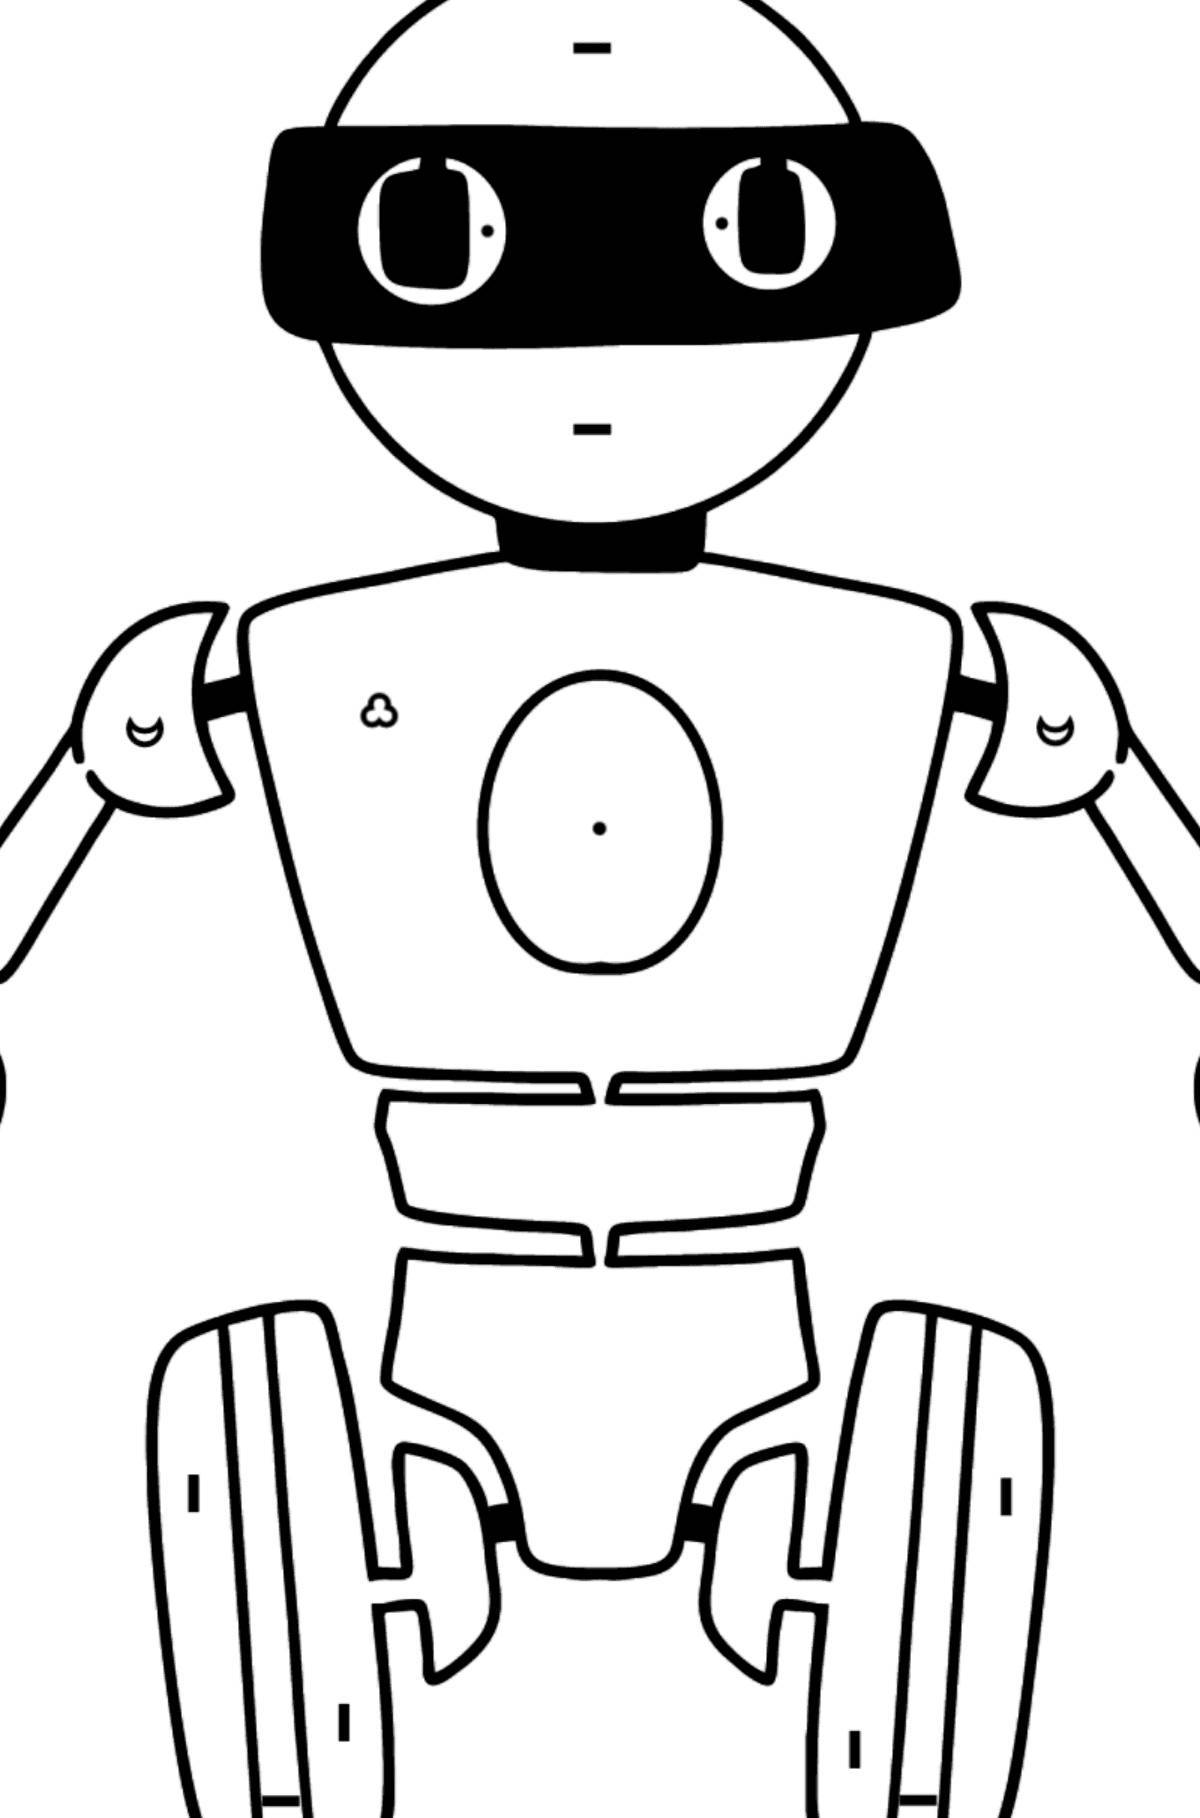 Fun robot coloring book for kids